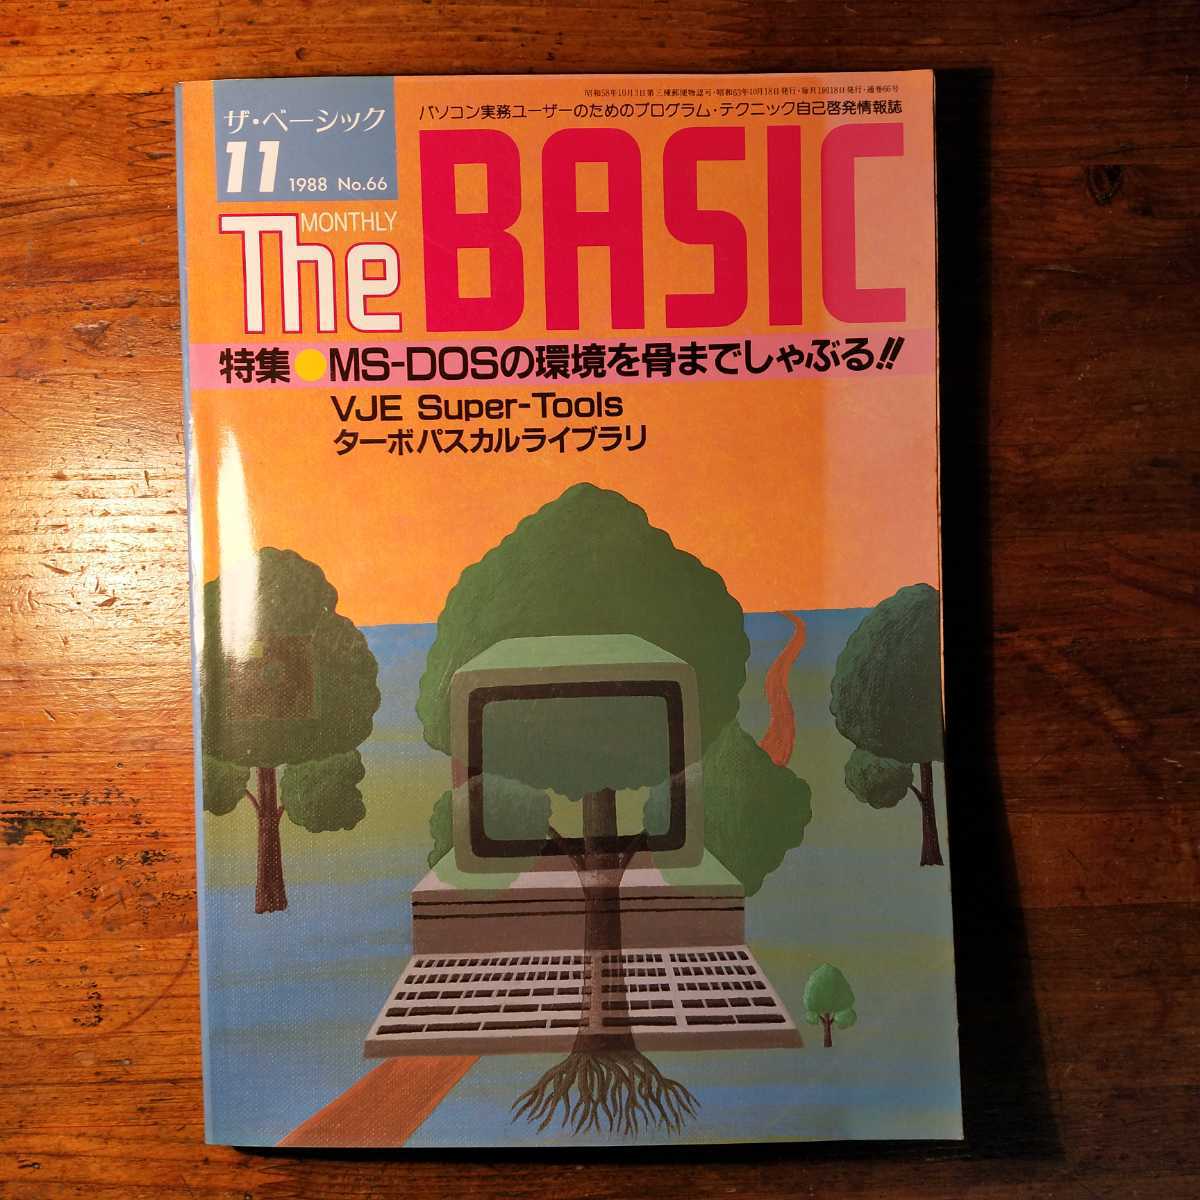 [ бесплатная доставка ]The BASIC The * Basic 1988 год 11 месяц номер no.66(MS-DOS. окружающая среда turboPascal VJE super Tours PC-9801 retro PC журнал технология критика фирма 